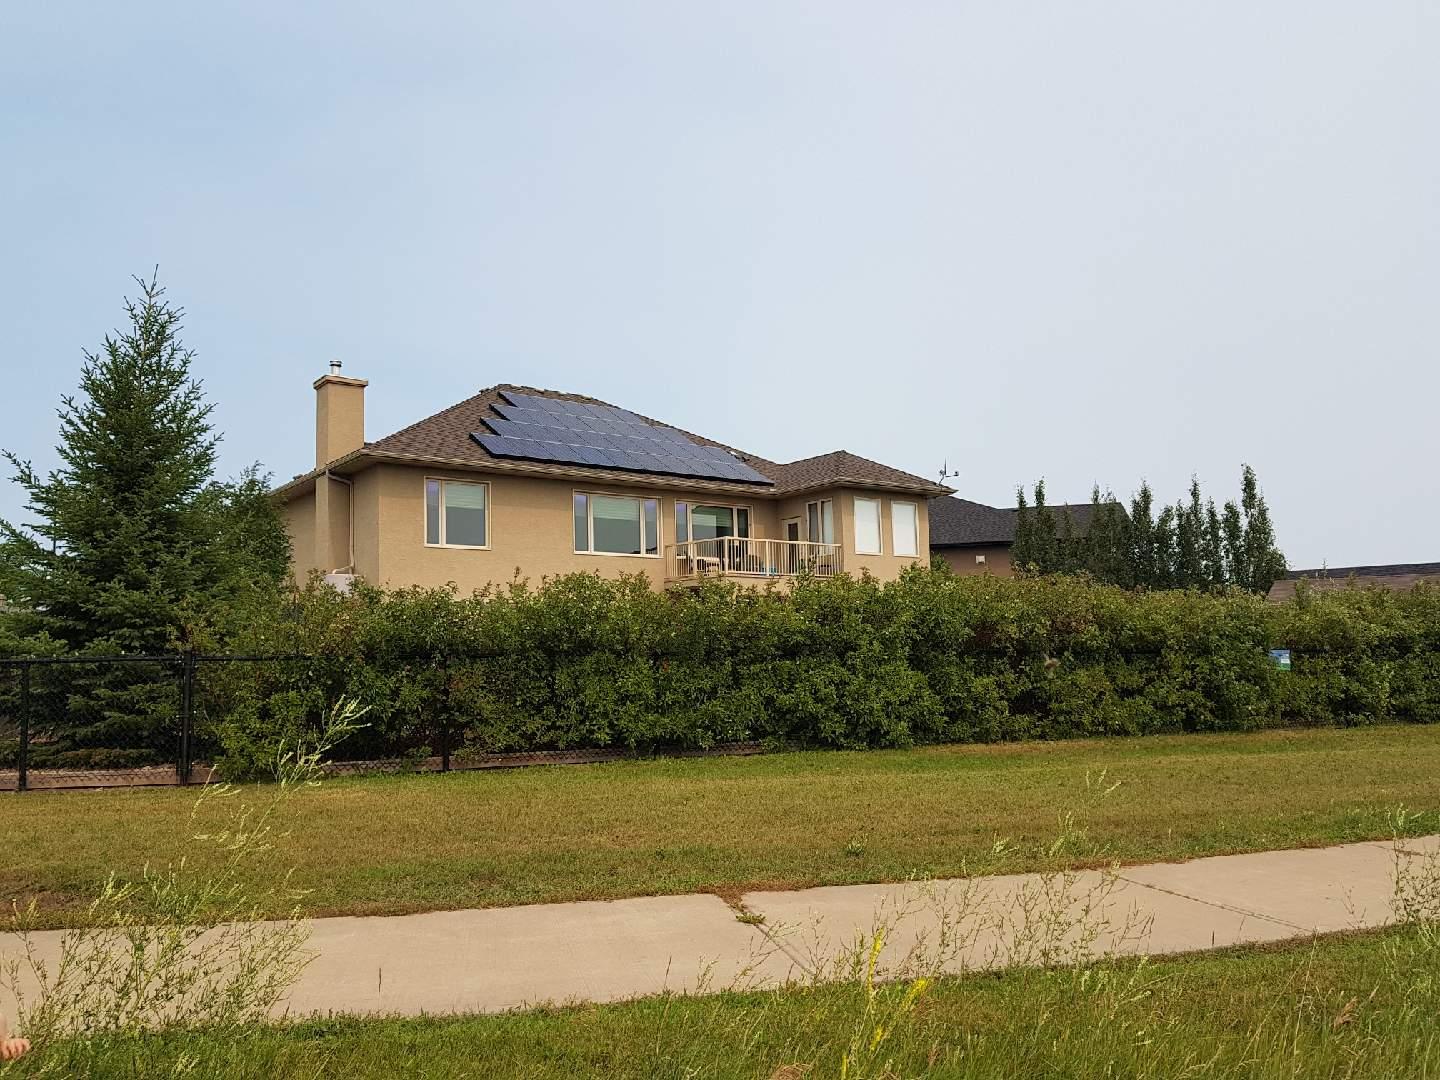 8.2 KW solar array Camrose Alberta